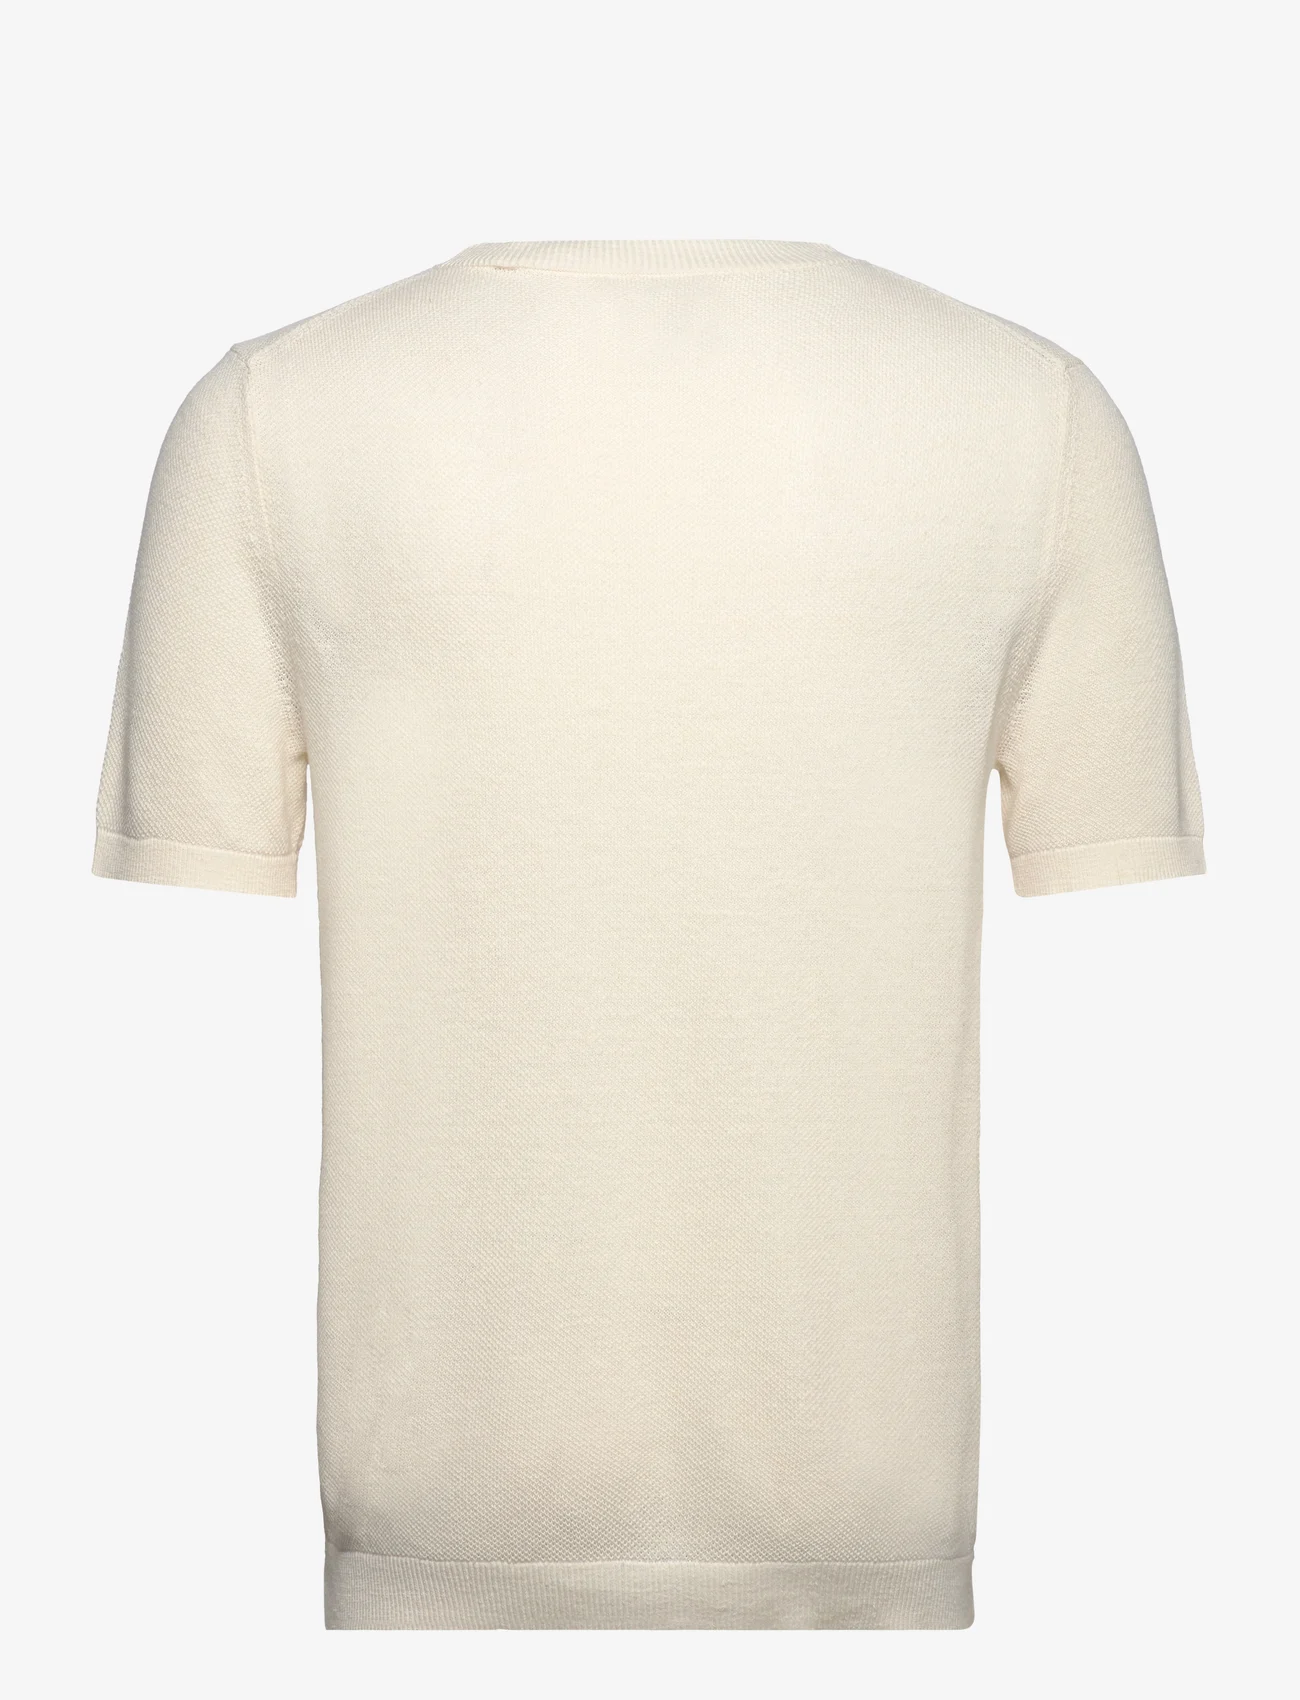 GANT - PIQUE T-SHIRT - short-sleeved t-shirts - cream - 1